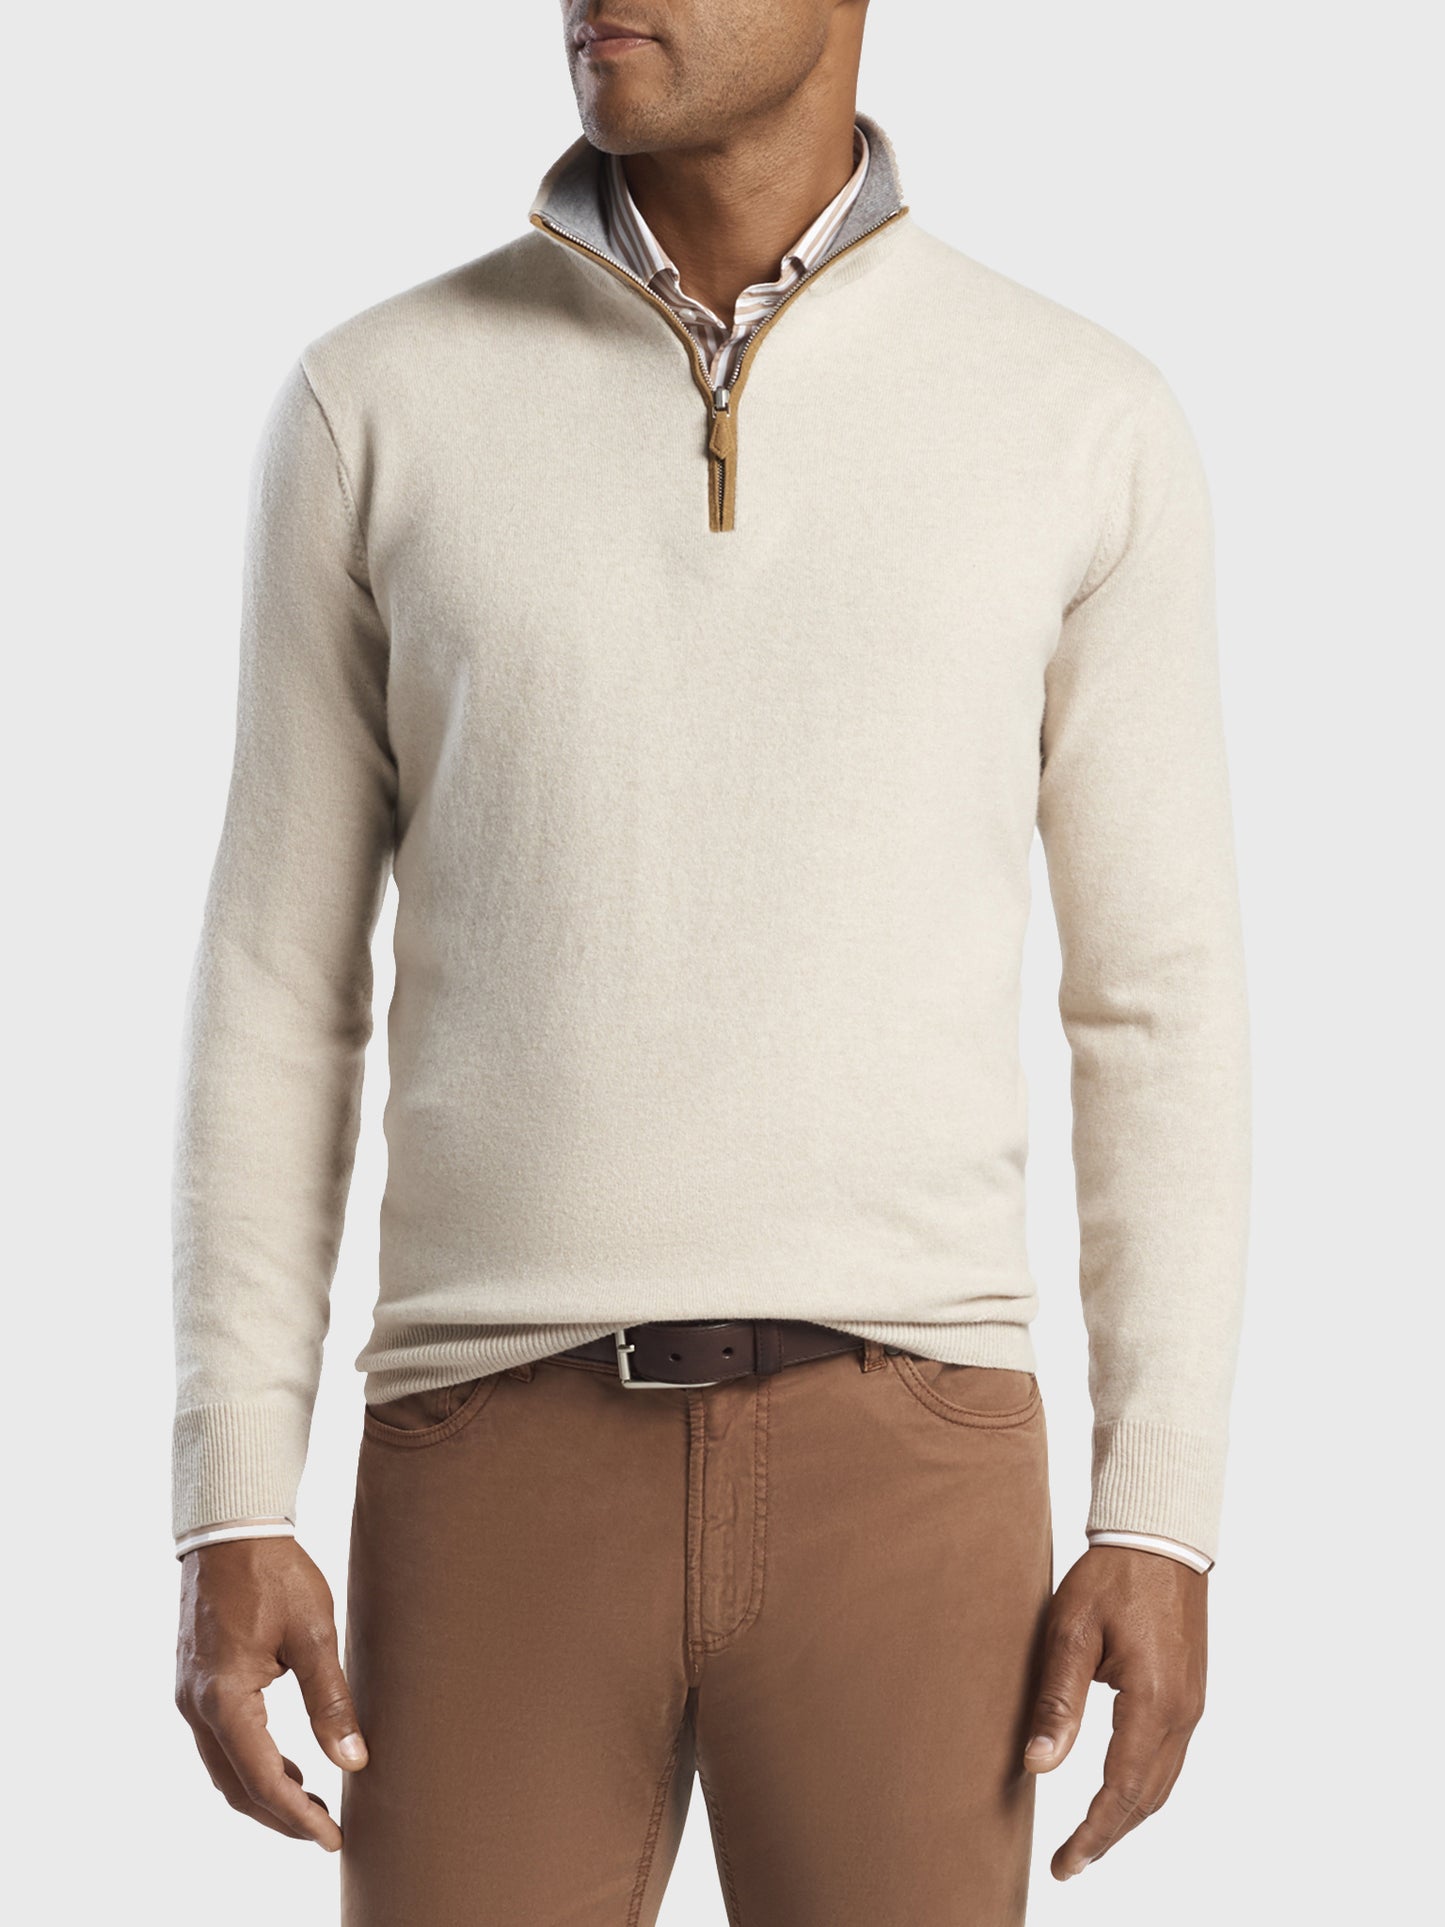 Peter Millar Men's Artisan Crafted Cashmere Quarter-Zip Pullover Sweater